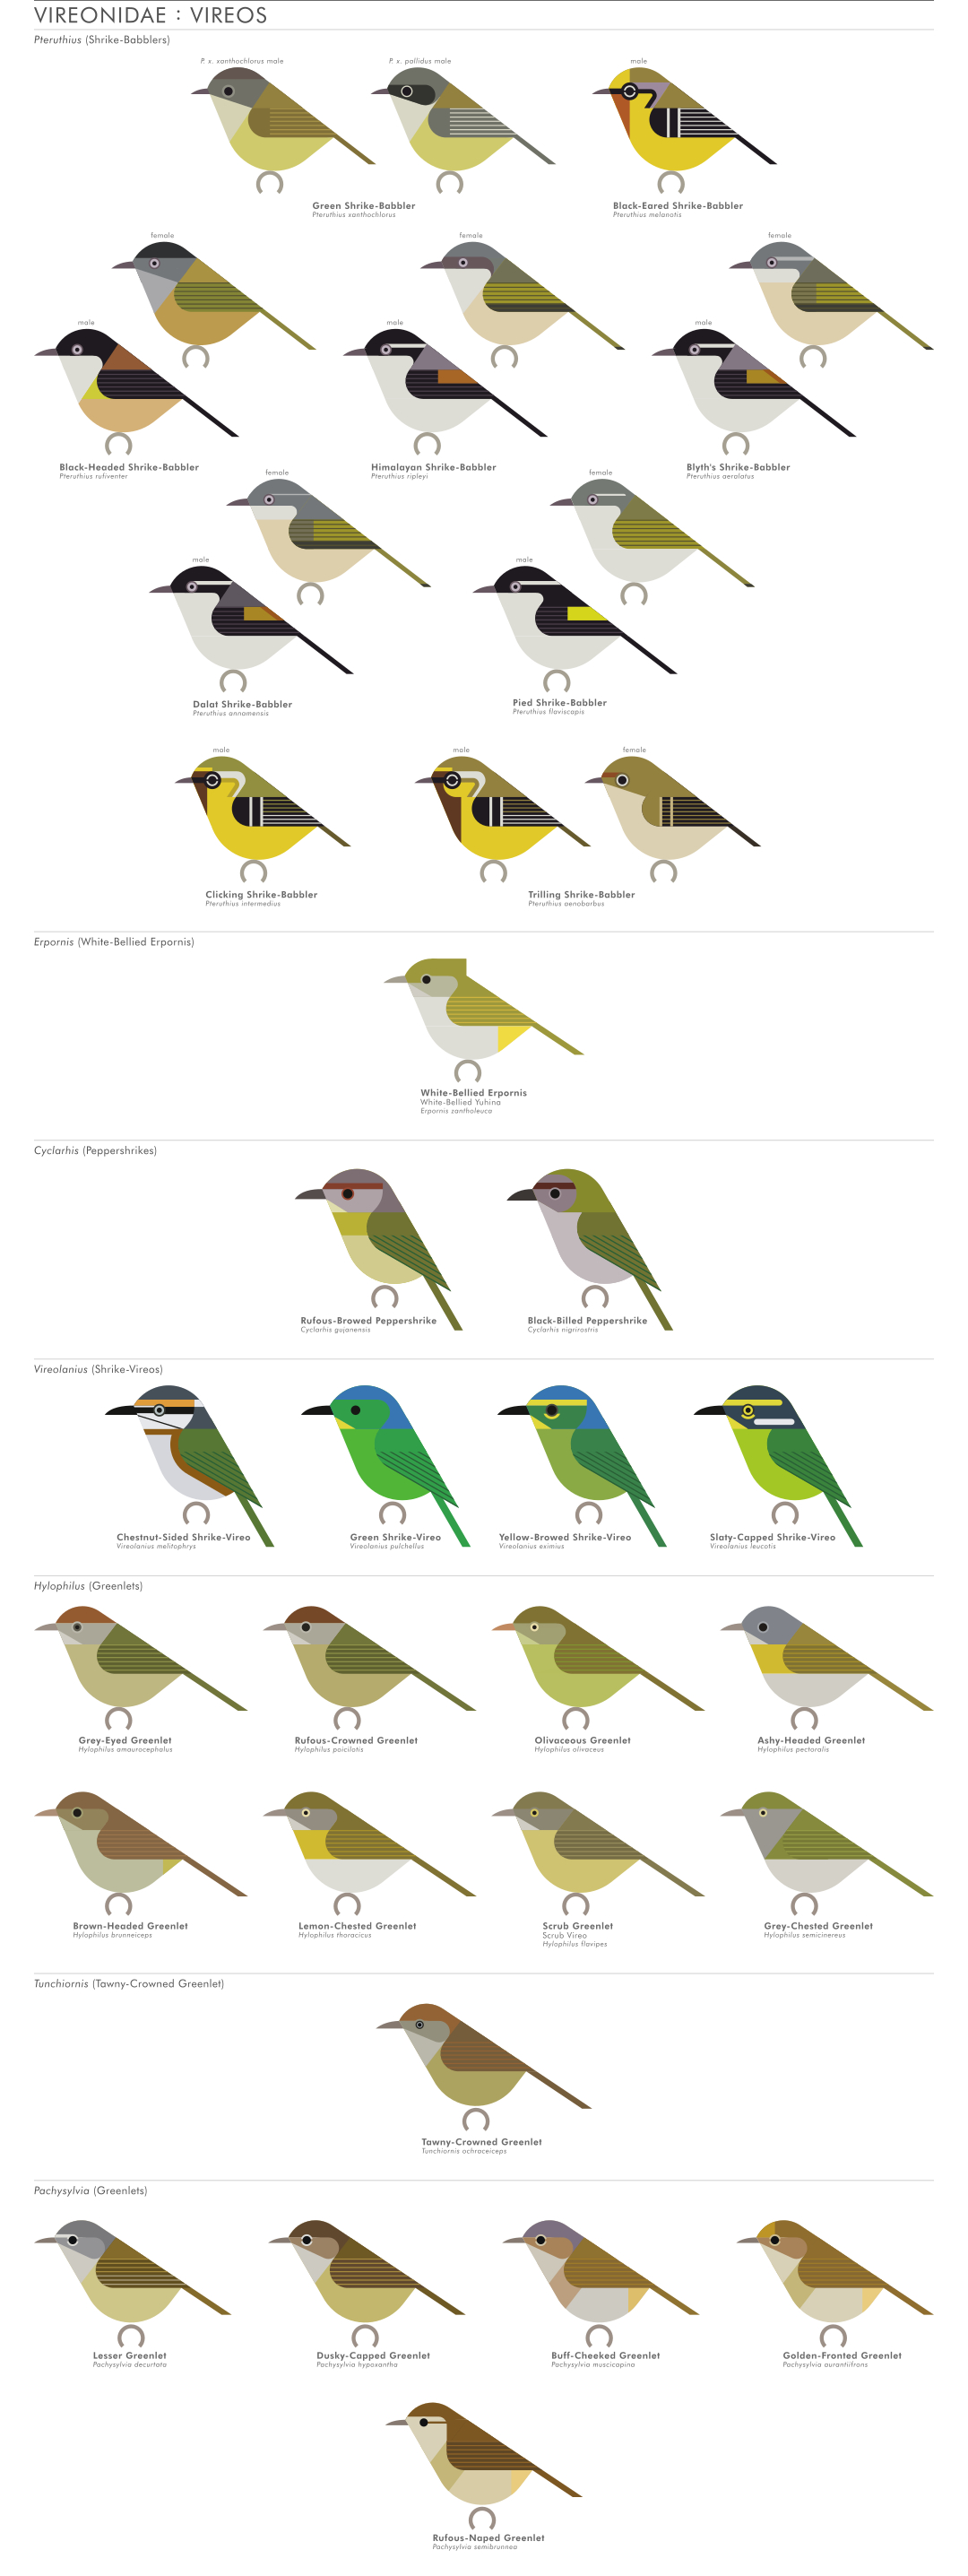 scott partridge - AVE - avian vector encyclopedia - vireos - bird vector art